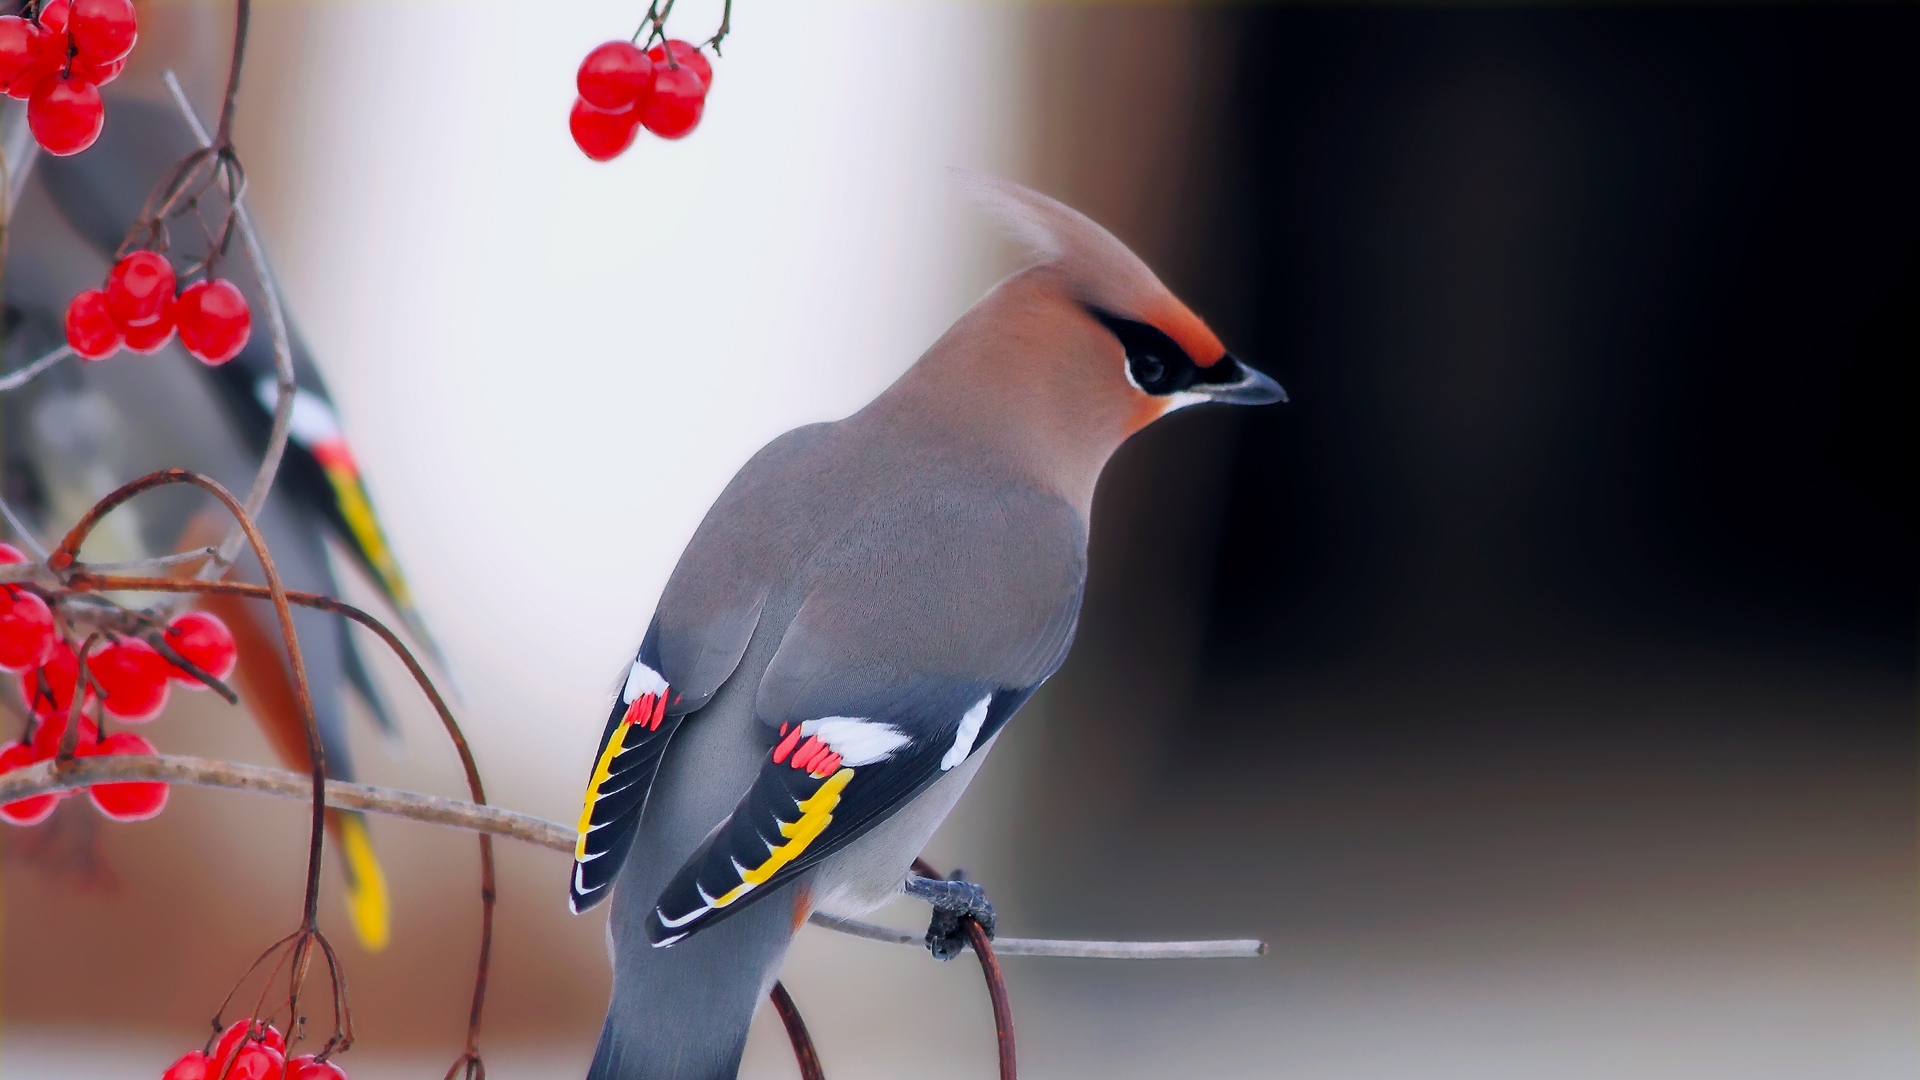 351363 descargar imagen animales, bombycilla, ave, aves: fondos de pantalla y protectores de pantalla gratis